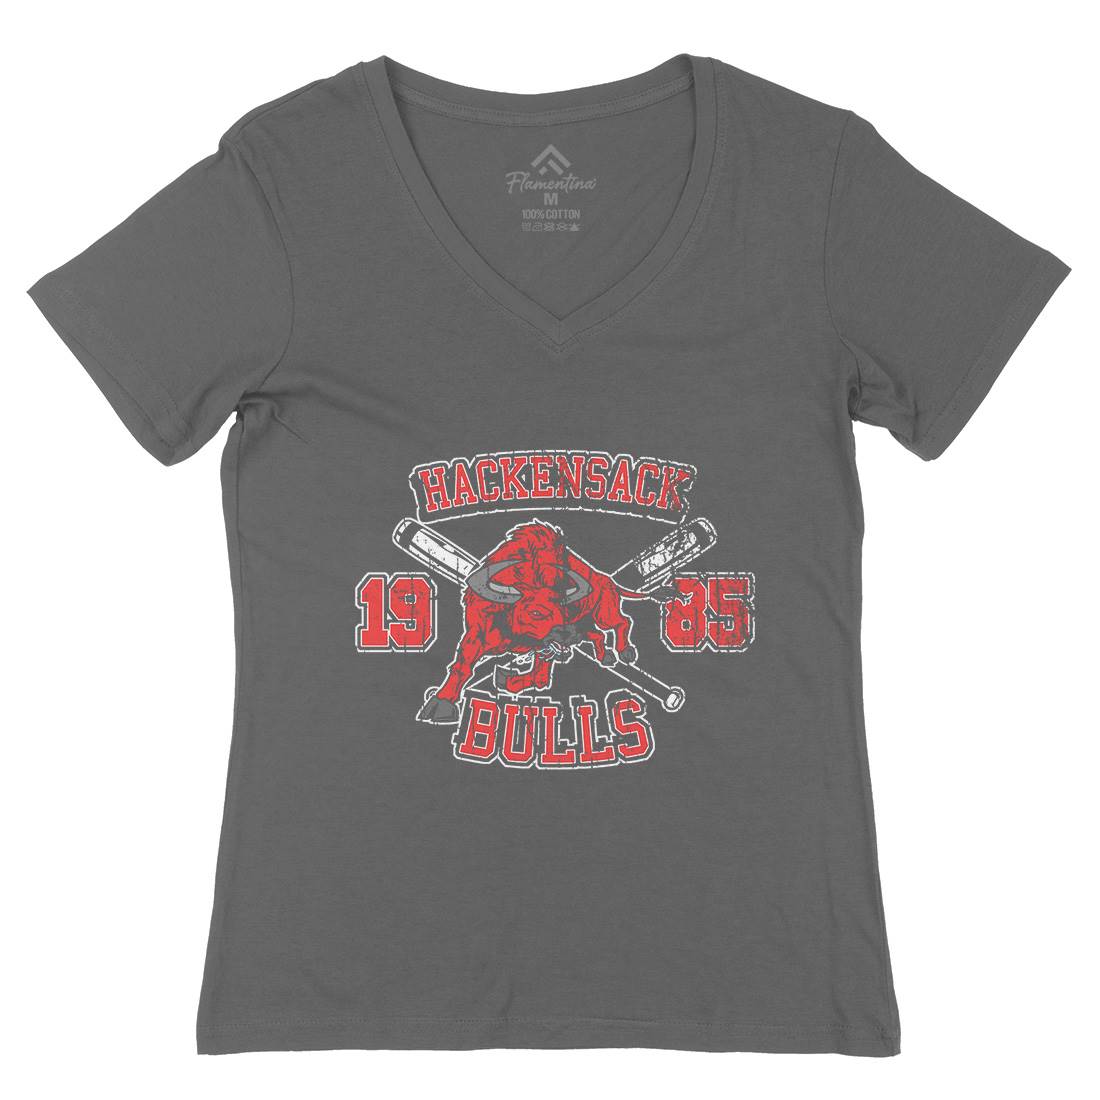 Hackensack Bulls Womens Organic V-Neck T-Shirt Sport D121